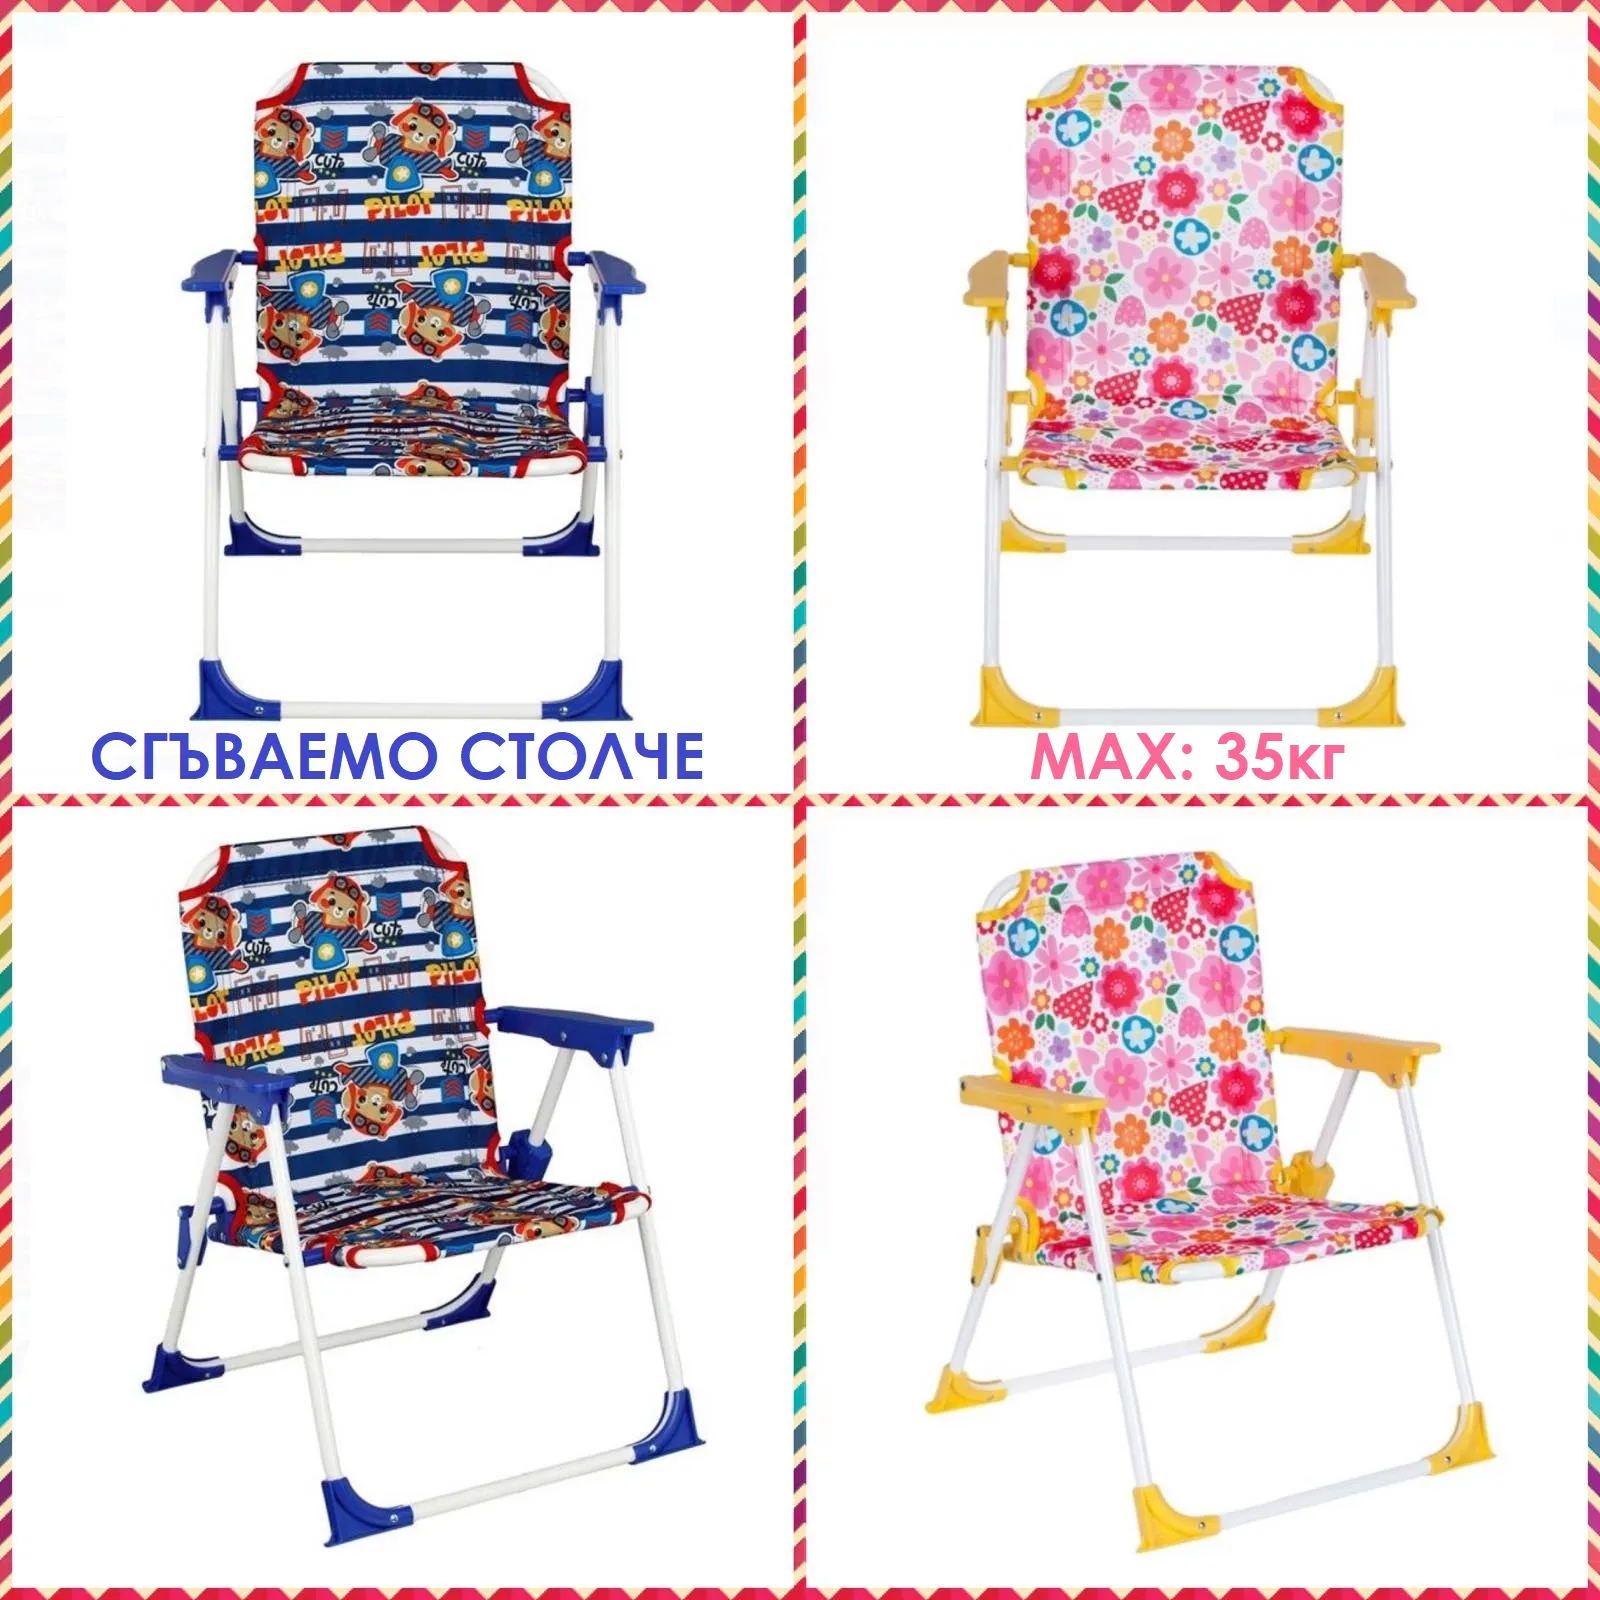 Детско сгъваемо столче с подлакътници, до 35кг, две разцветки | IGUANA.BG 1